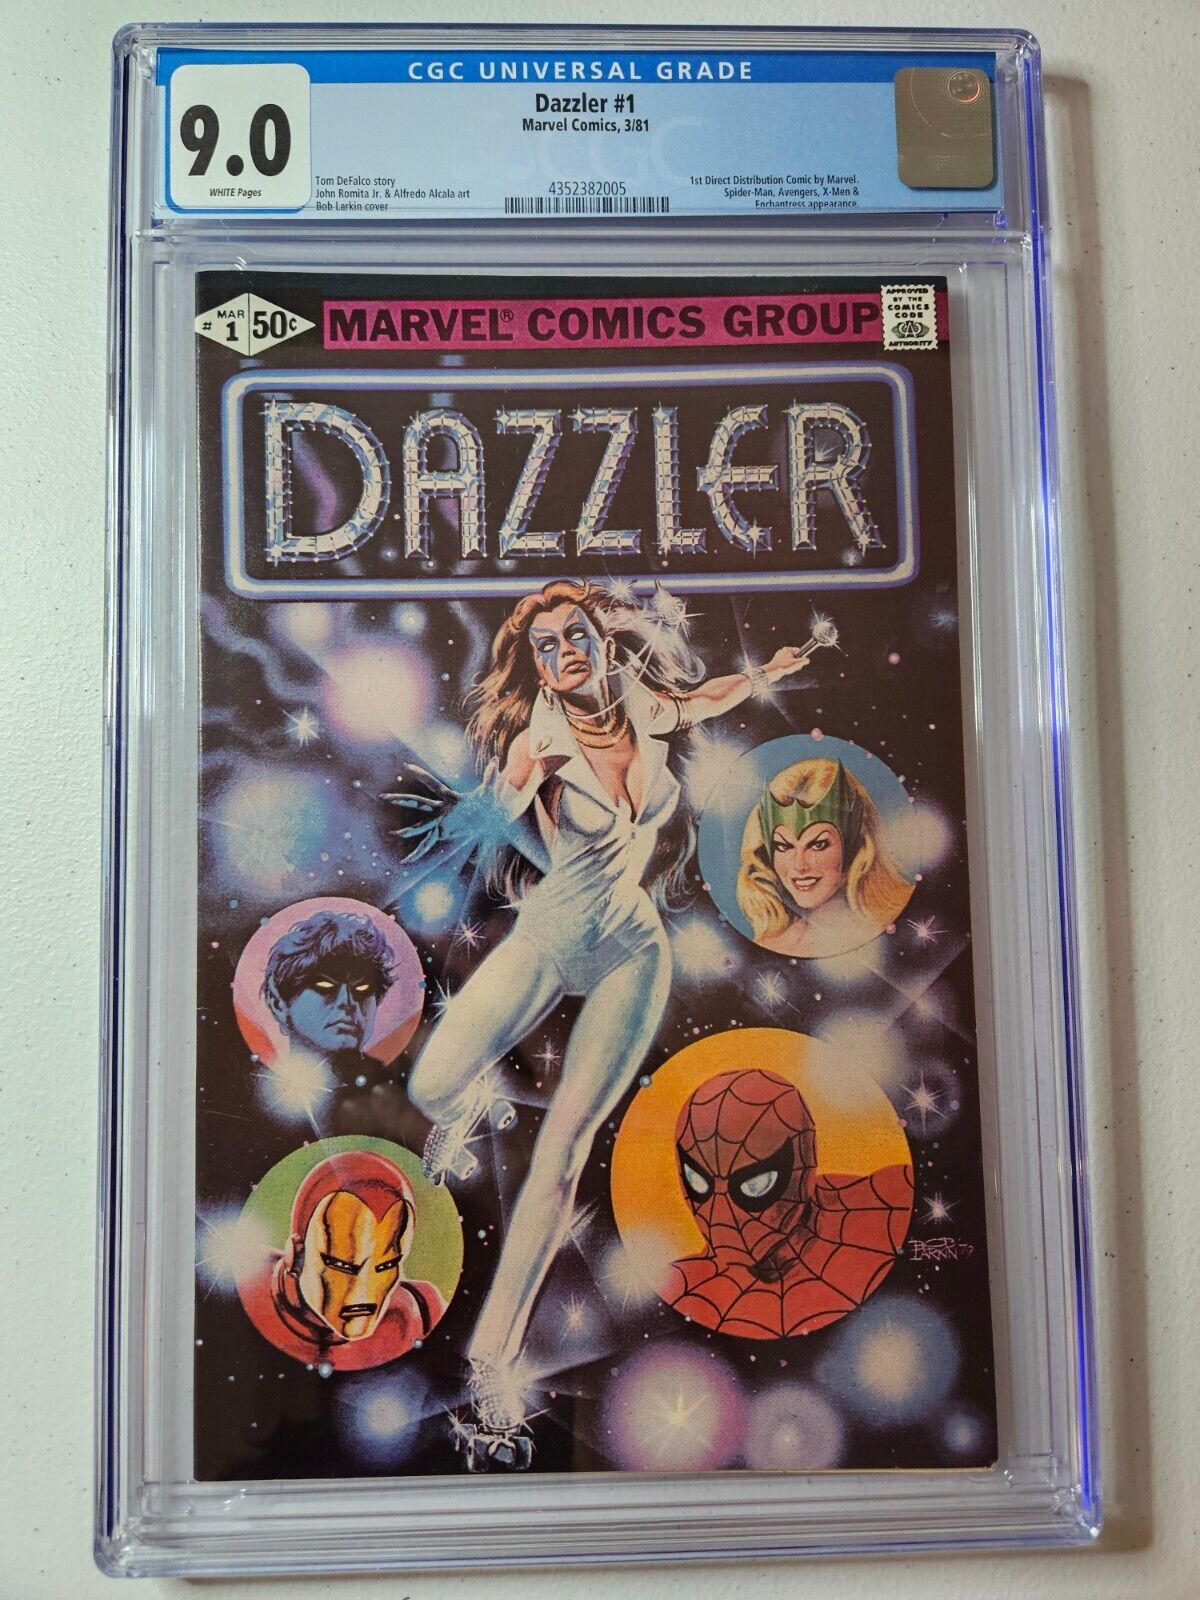 Dazzler #1 CGC 9.0 Marvel Comics 1981 - 4352382005 - Taylor Swift??